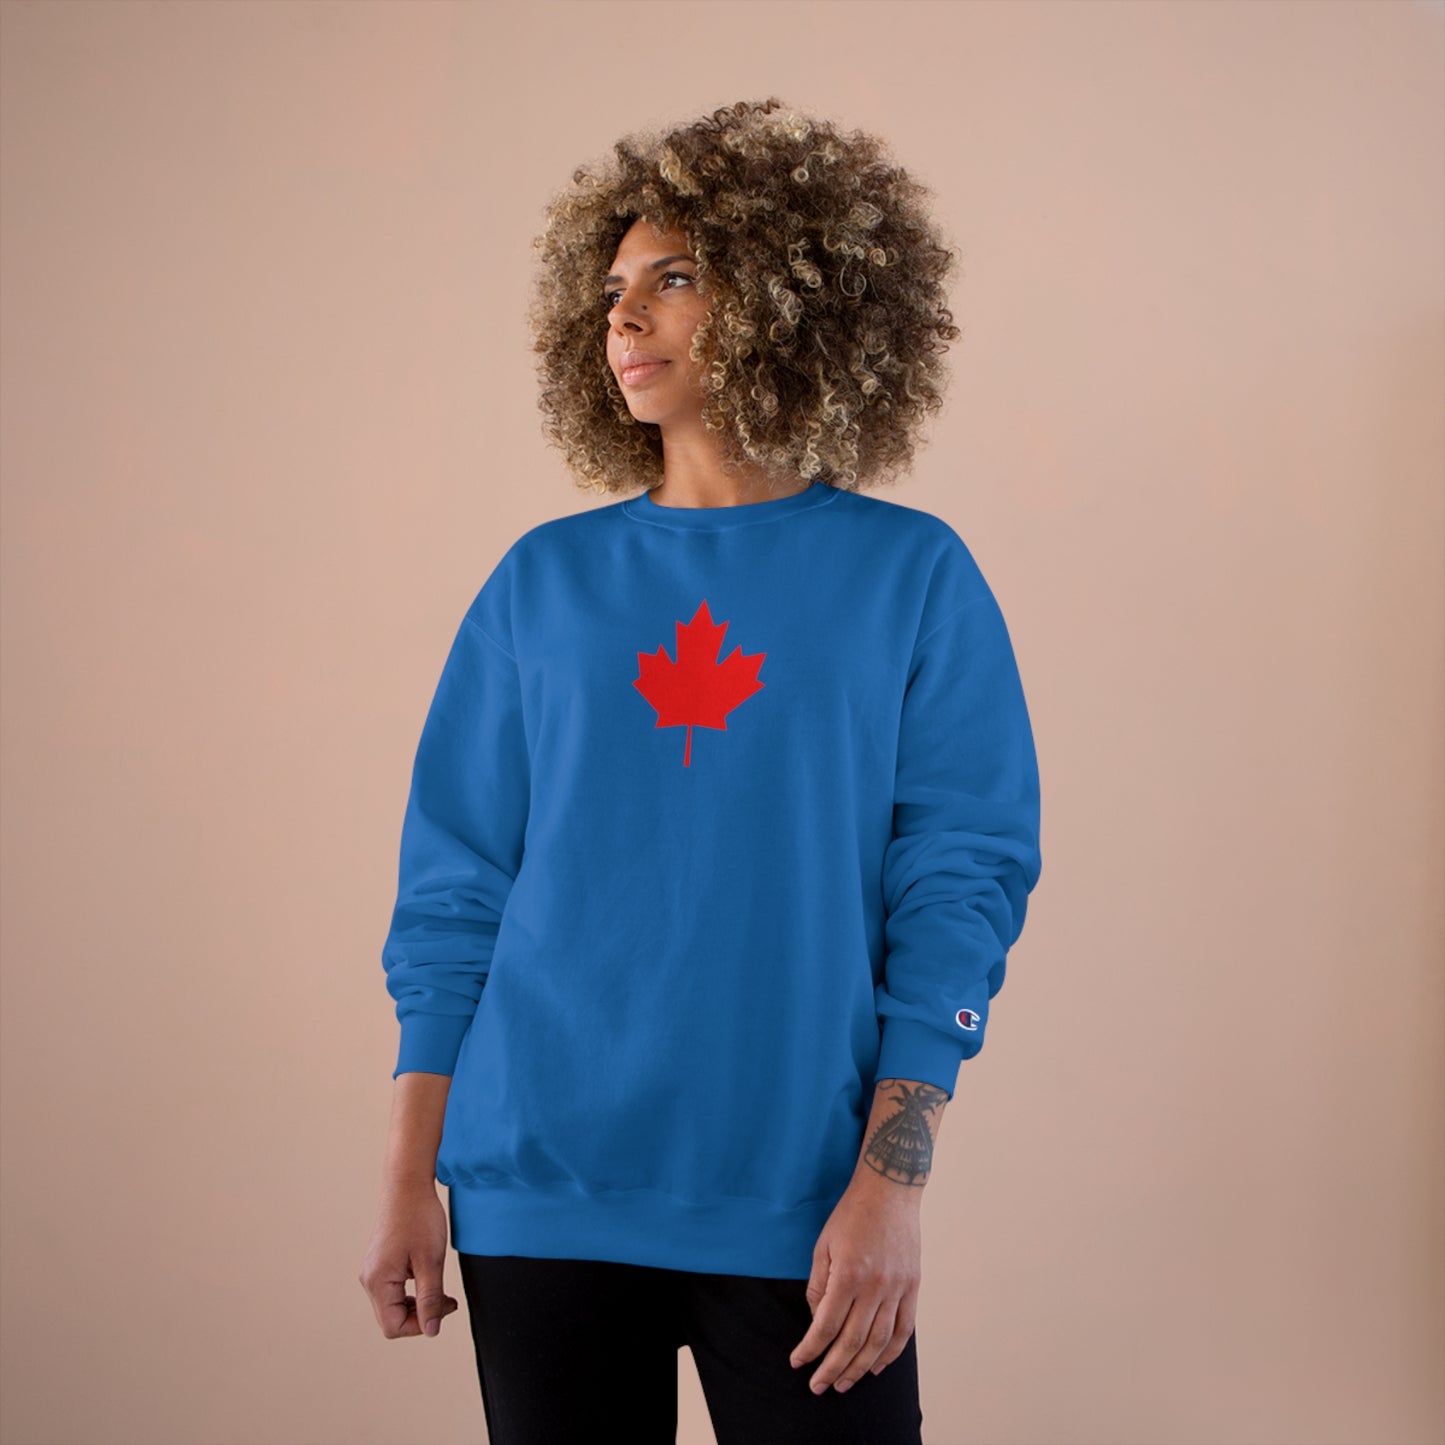 Champion Sweatshirt, Canadian Maple Leaf